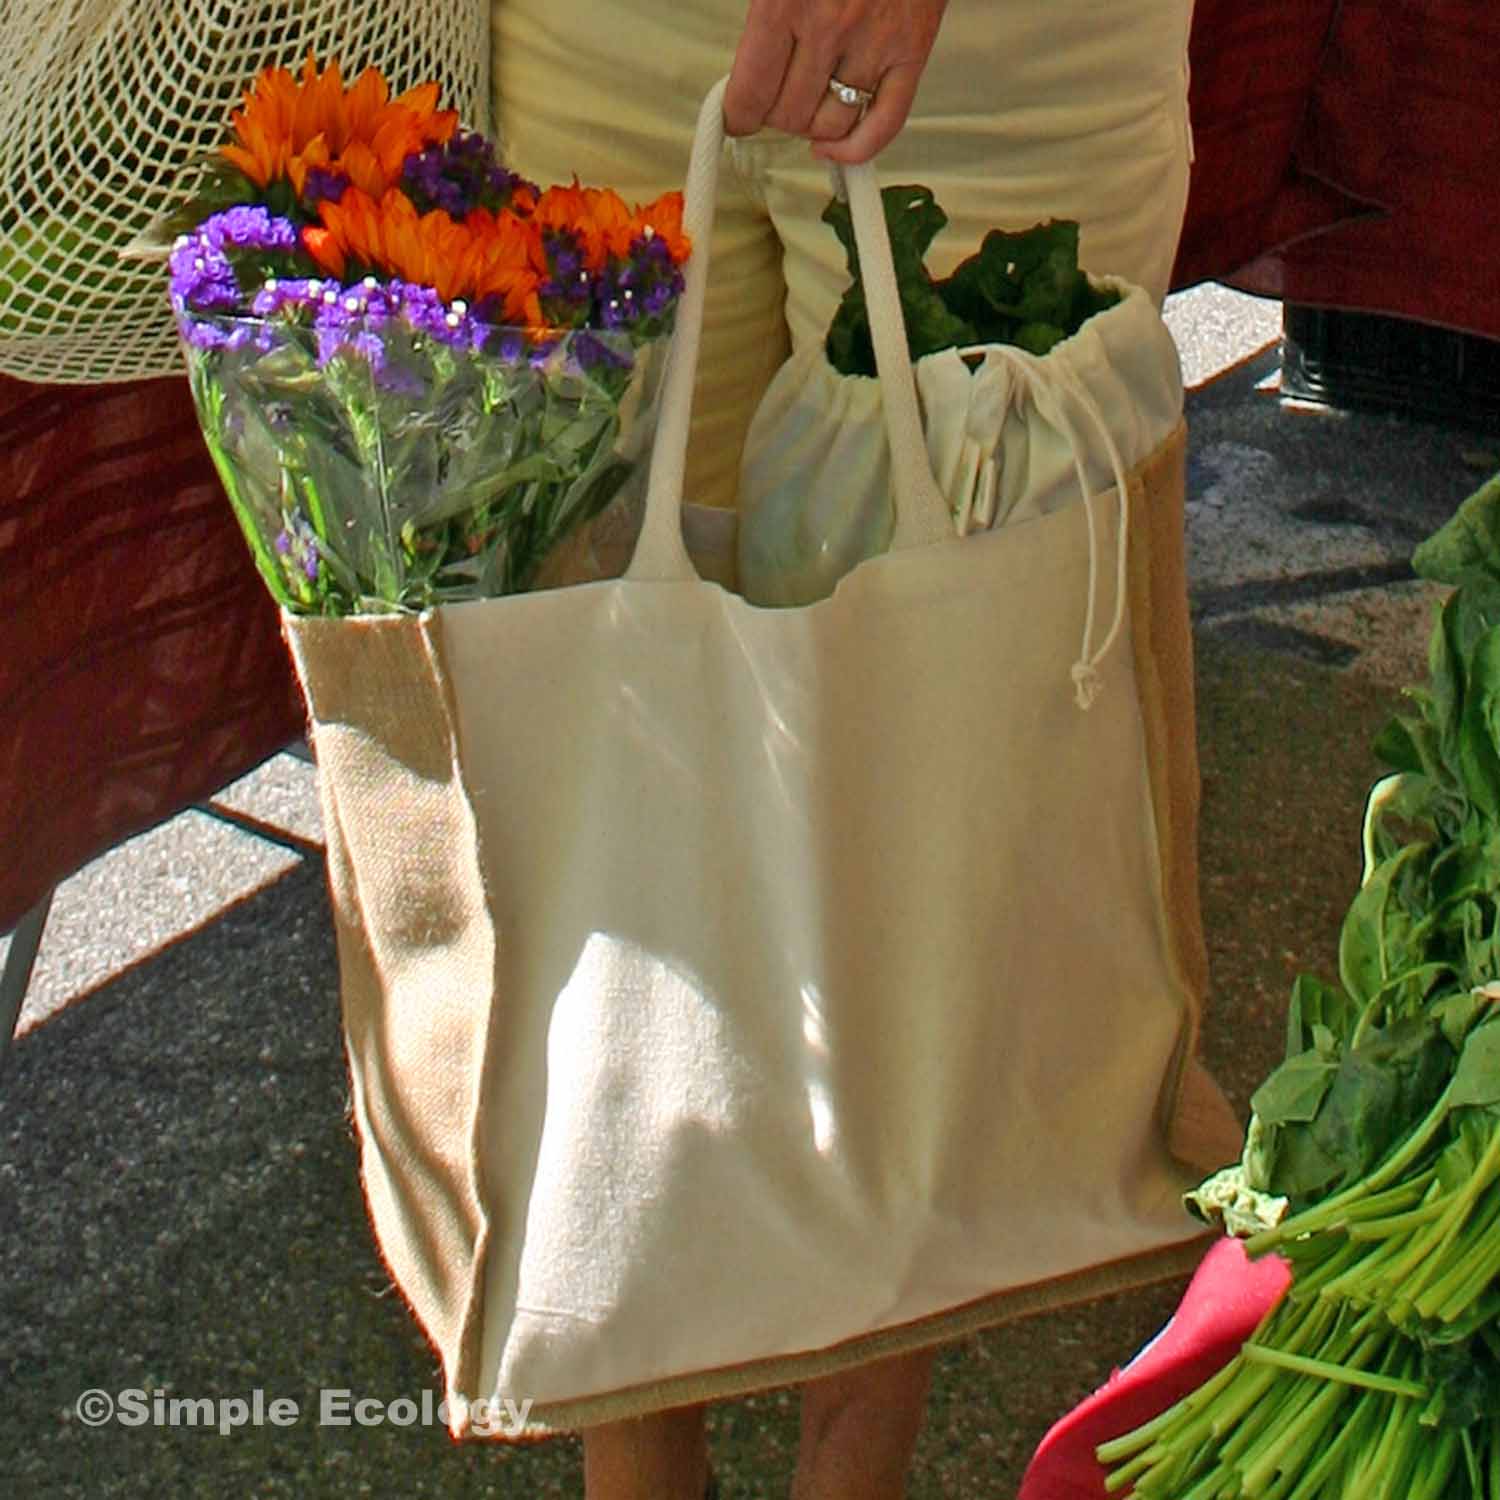 Floral Vision Eco Tote Bag